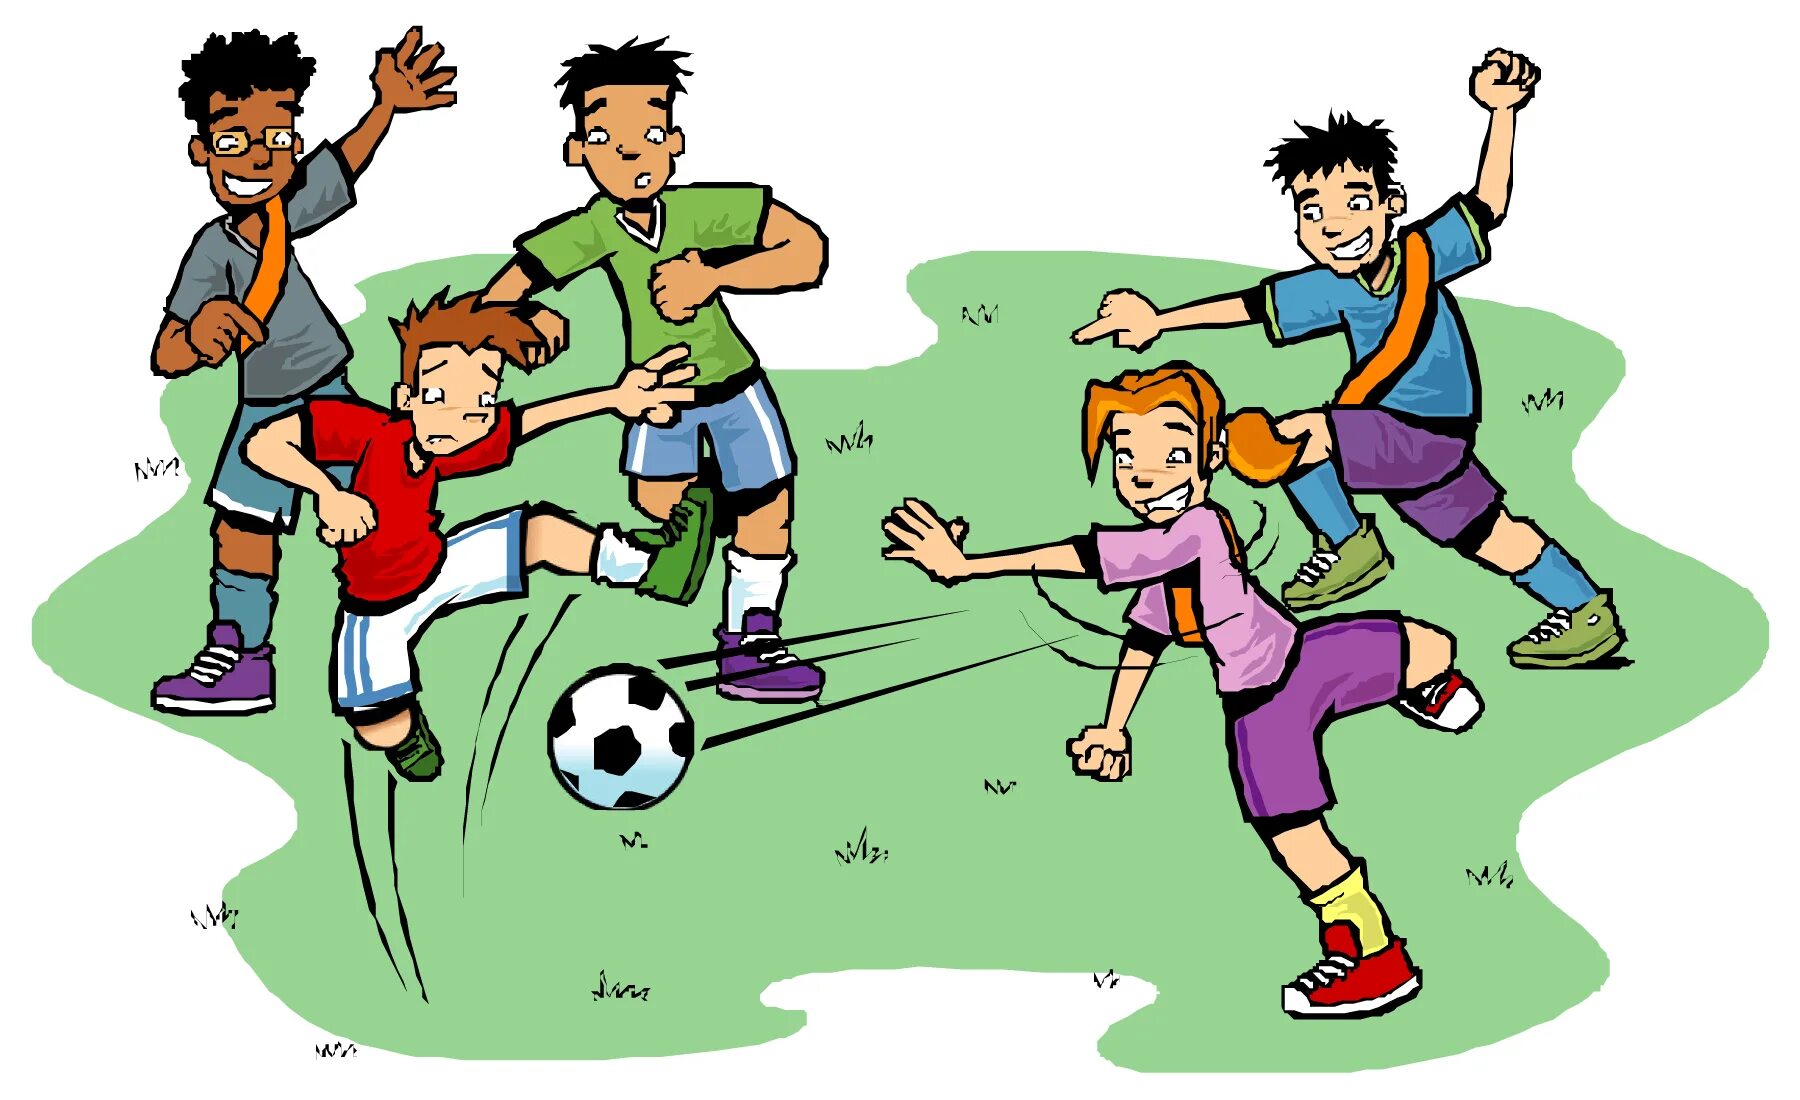 People go in for sports. Детский рисунок футбол. Футбол картинки для детей. Картинки про футбол для детей школьного возраста. Рисунок на тему футбол.